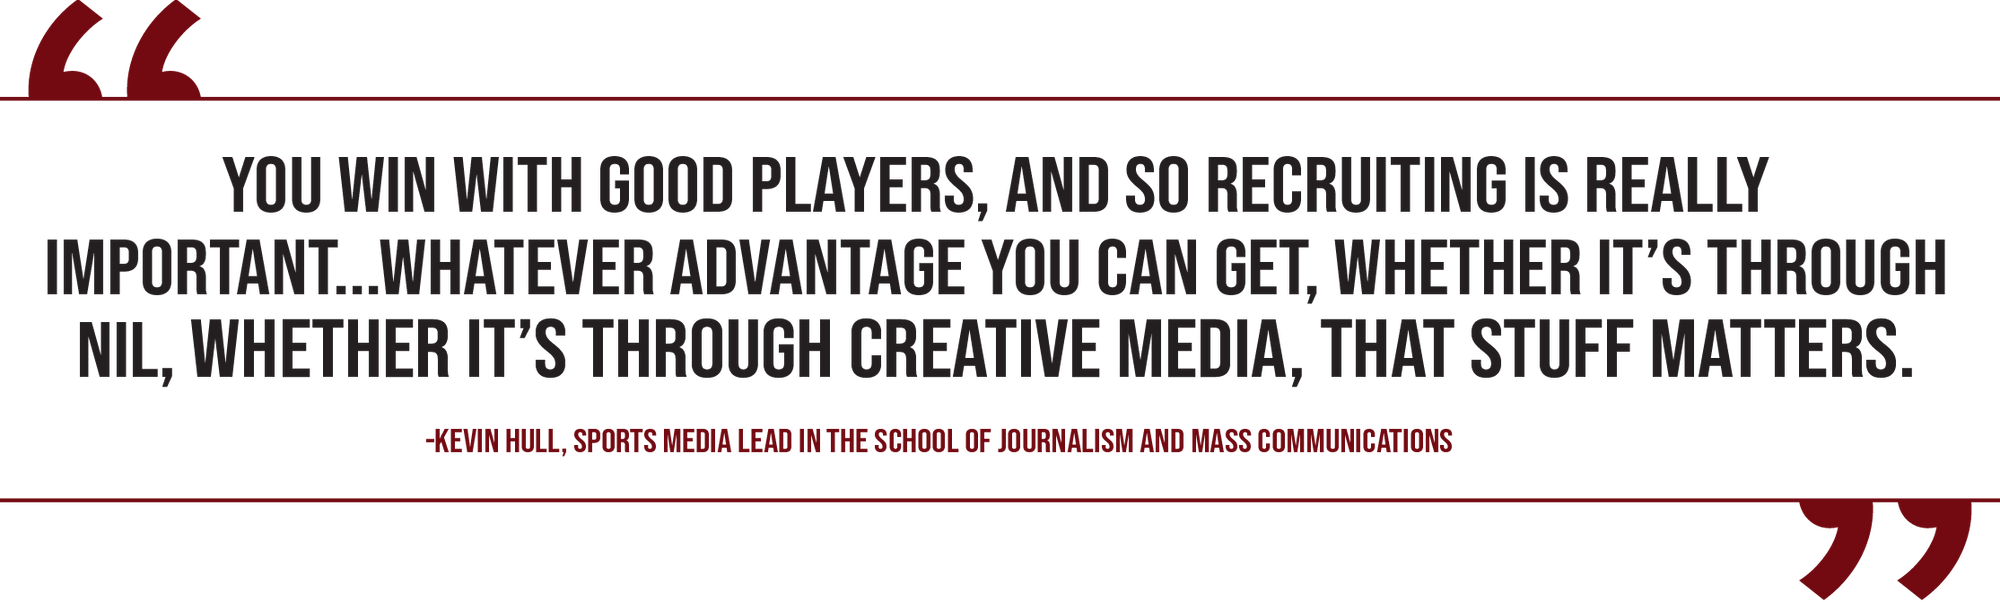 Creative Media Pull-Quote